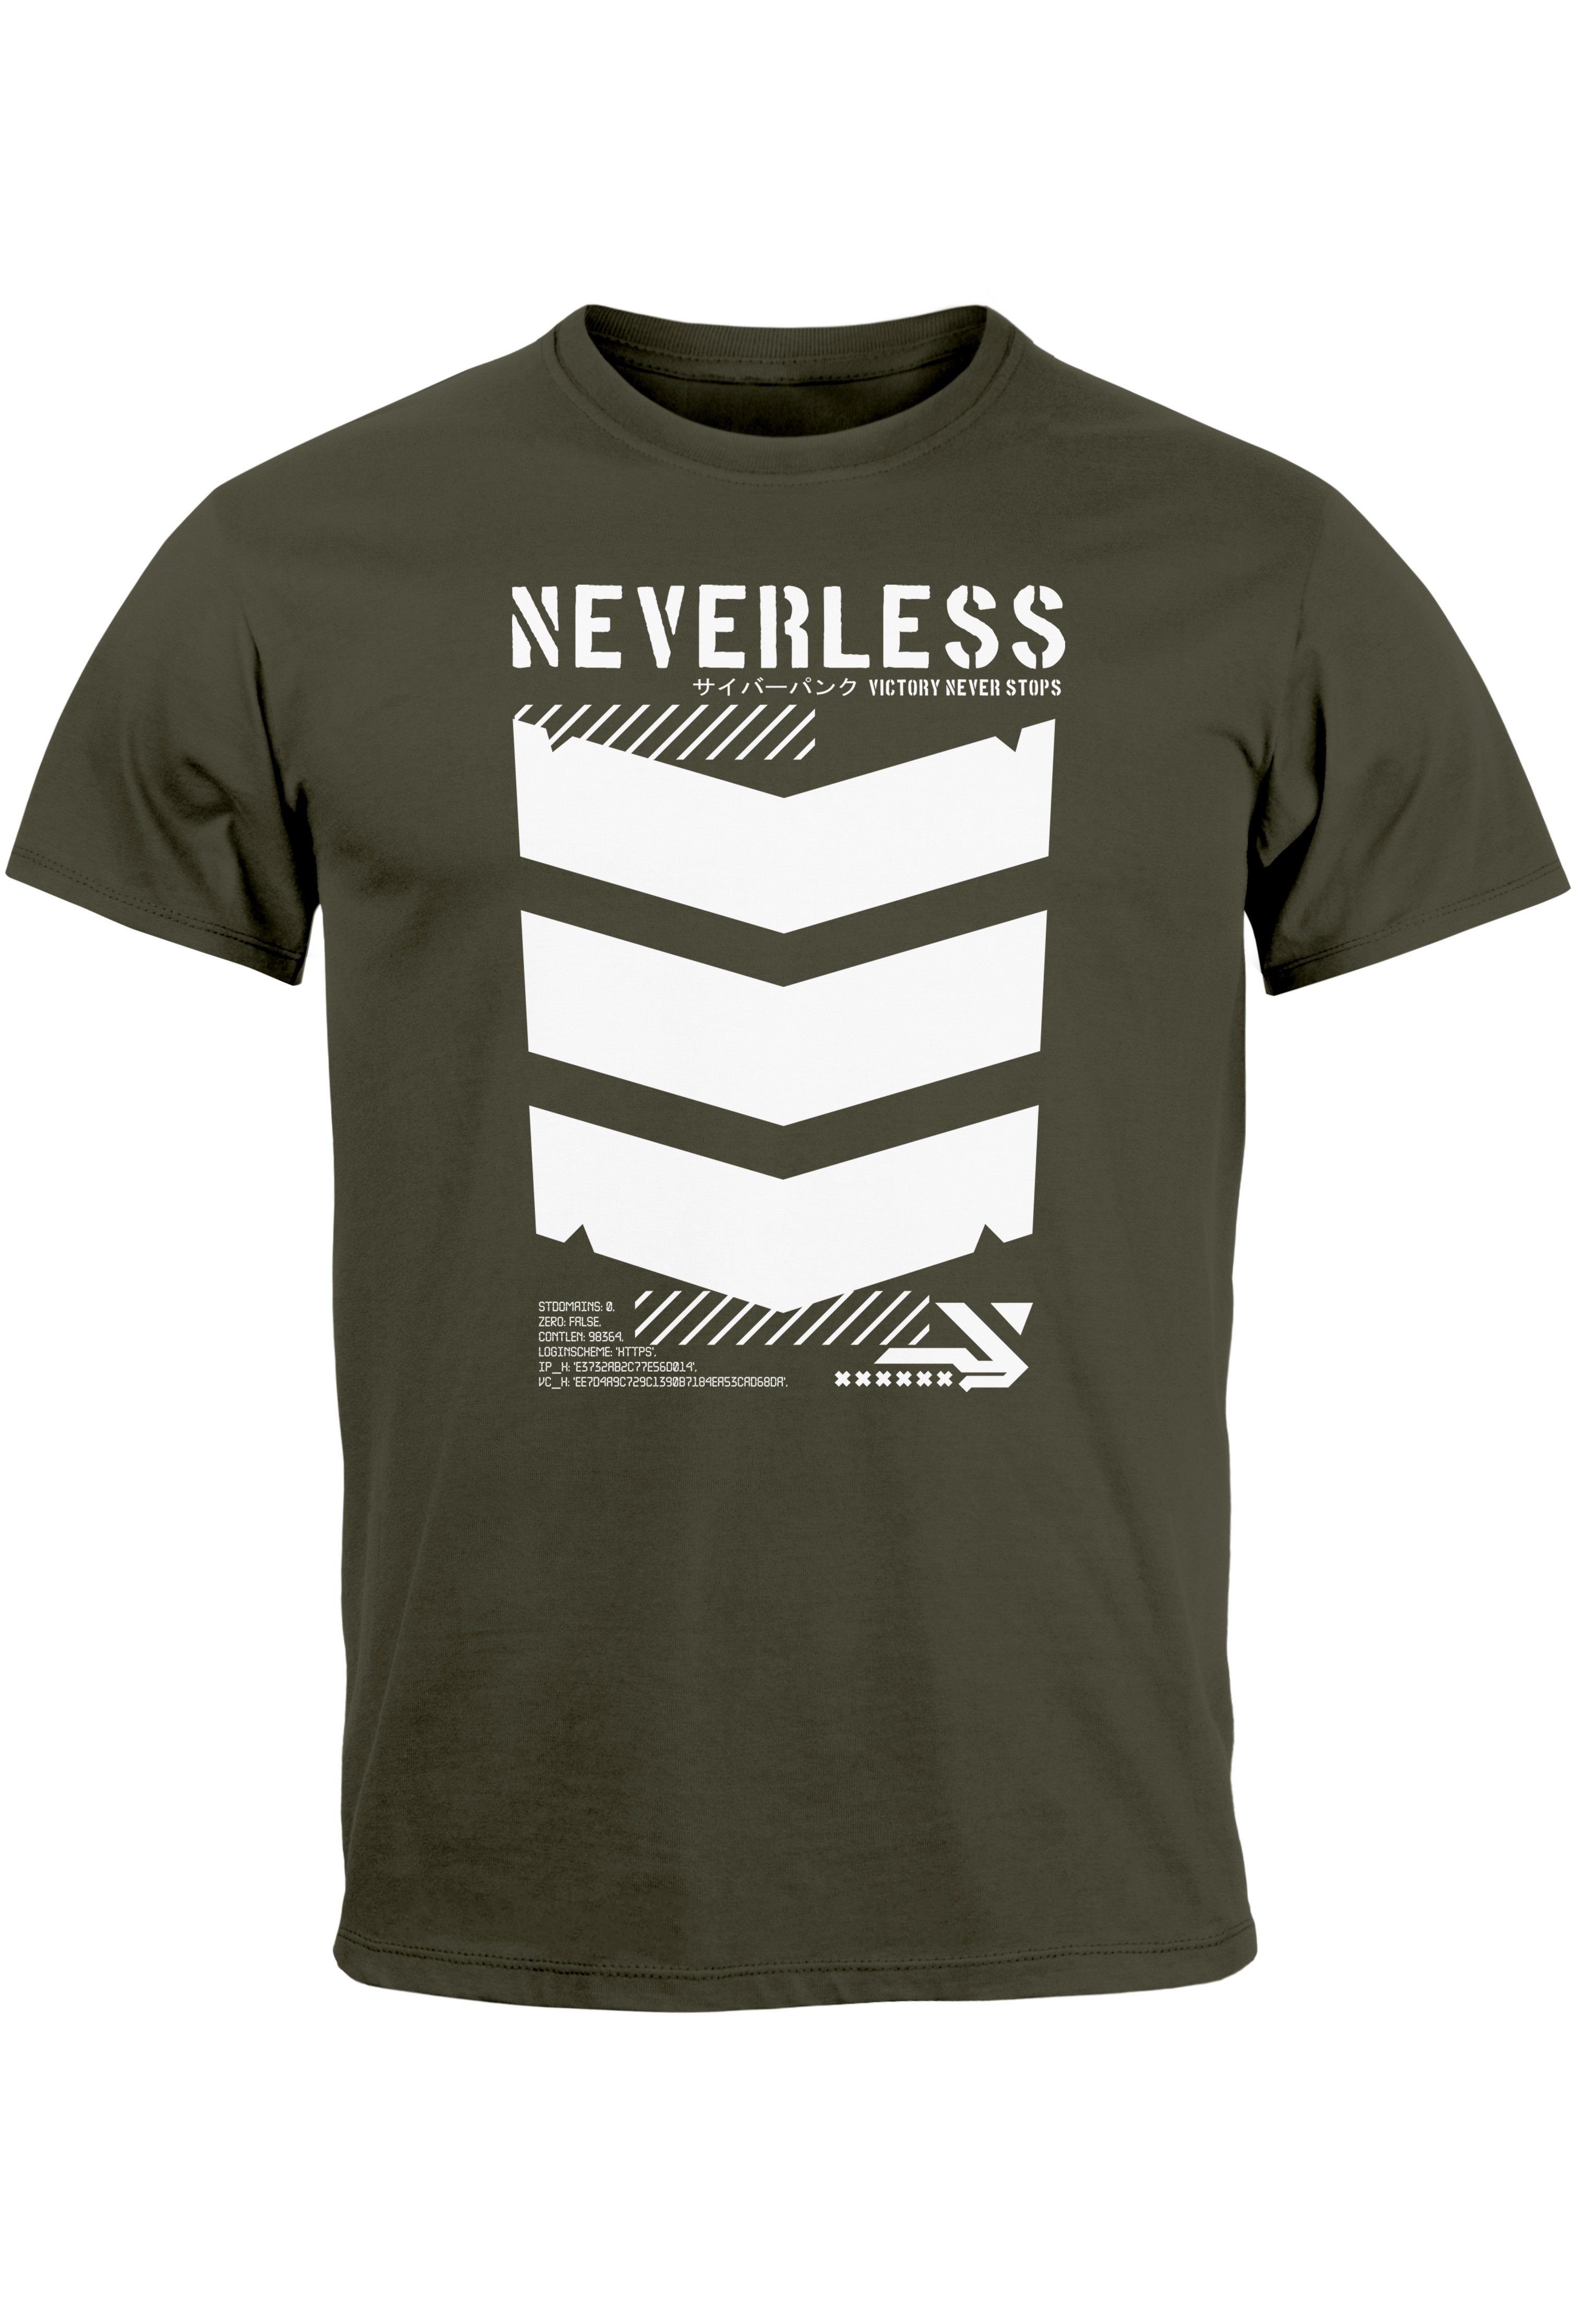 Neverless Print-Shirt Herren T-Shirt Techwear Trend Motive Japanese Streetstyle Military Fas mit Print army